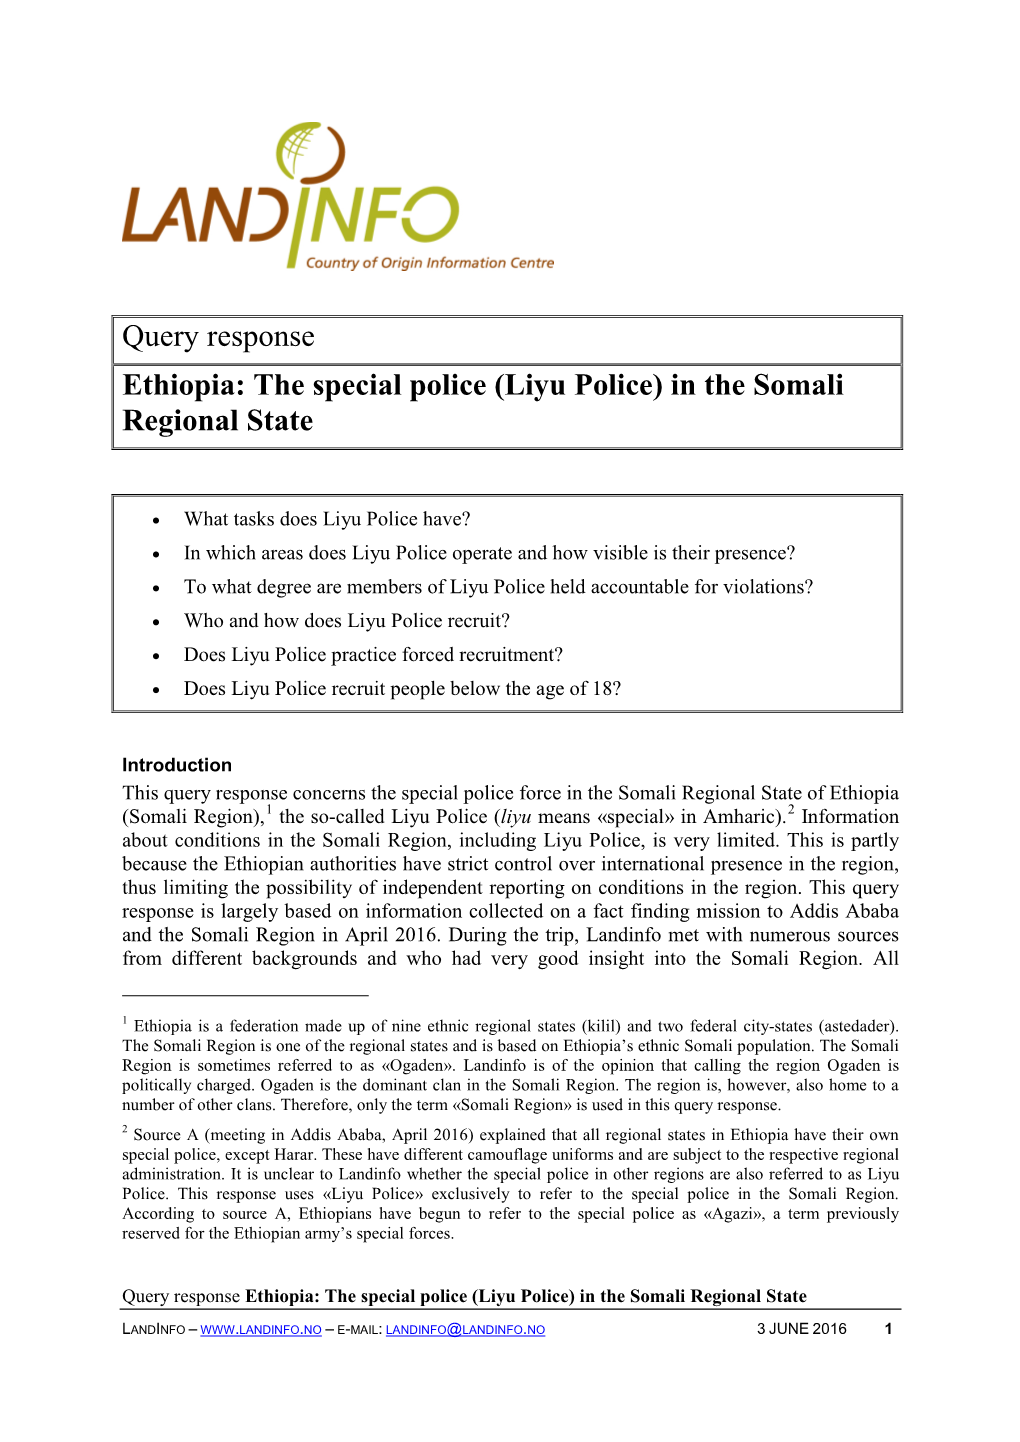 Liyu Police) in the Somali Regional State